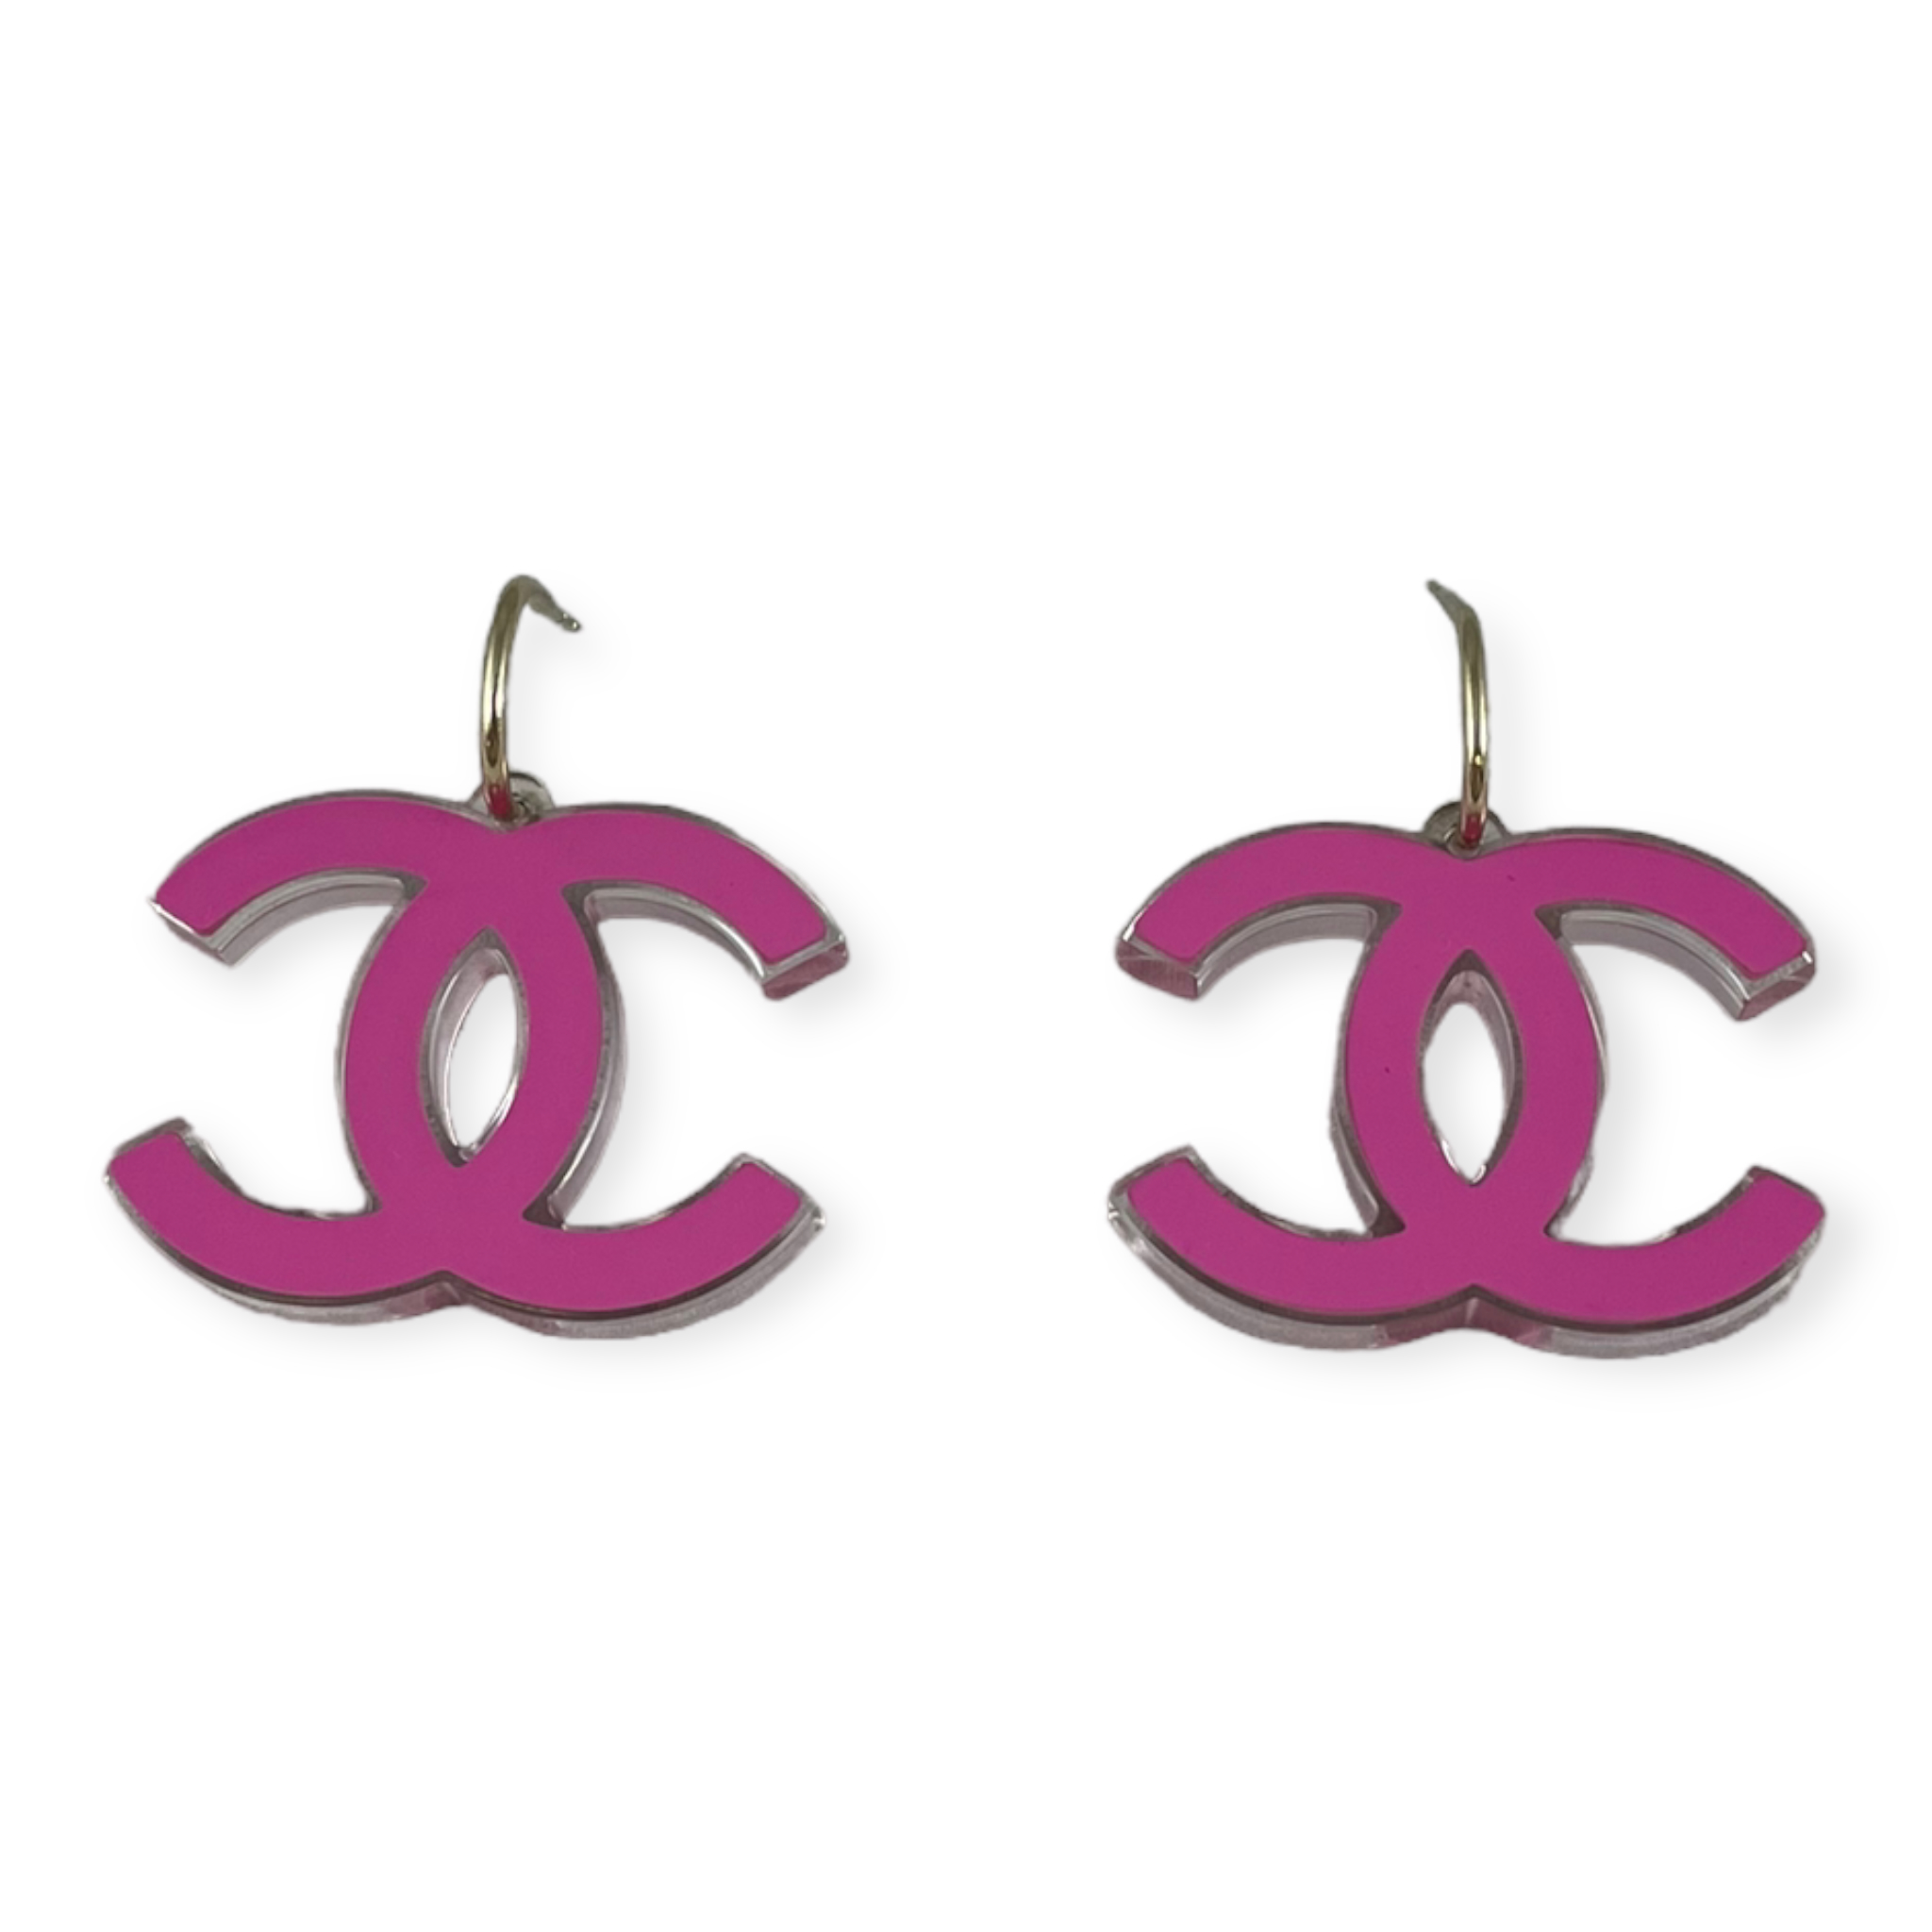 Chanel Lucite CC Drop Earrings in Pink Reversible | MTYCI